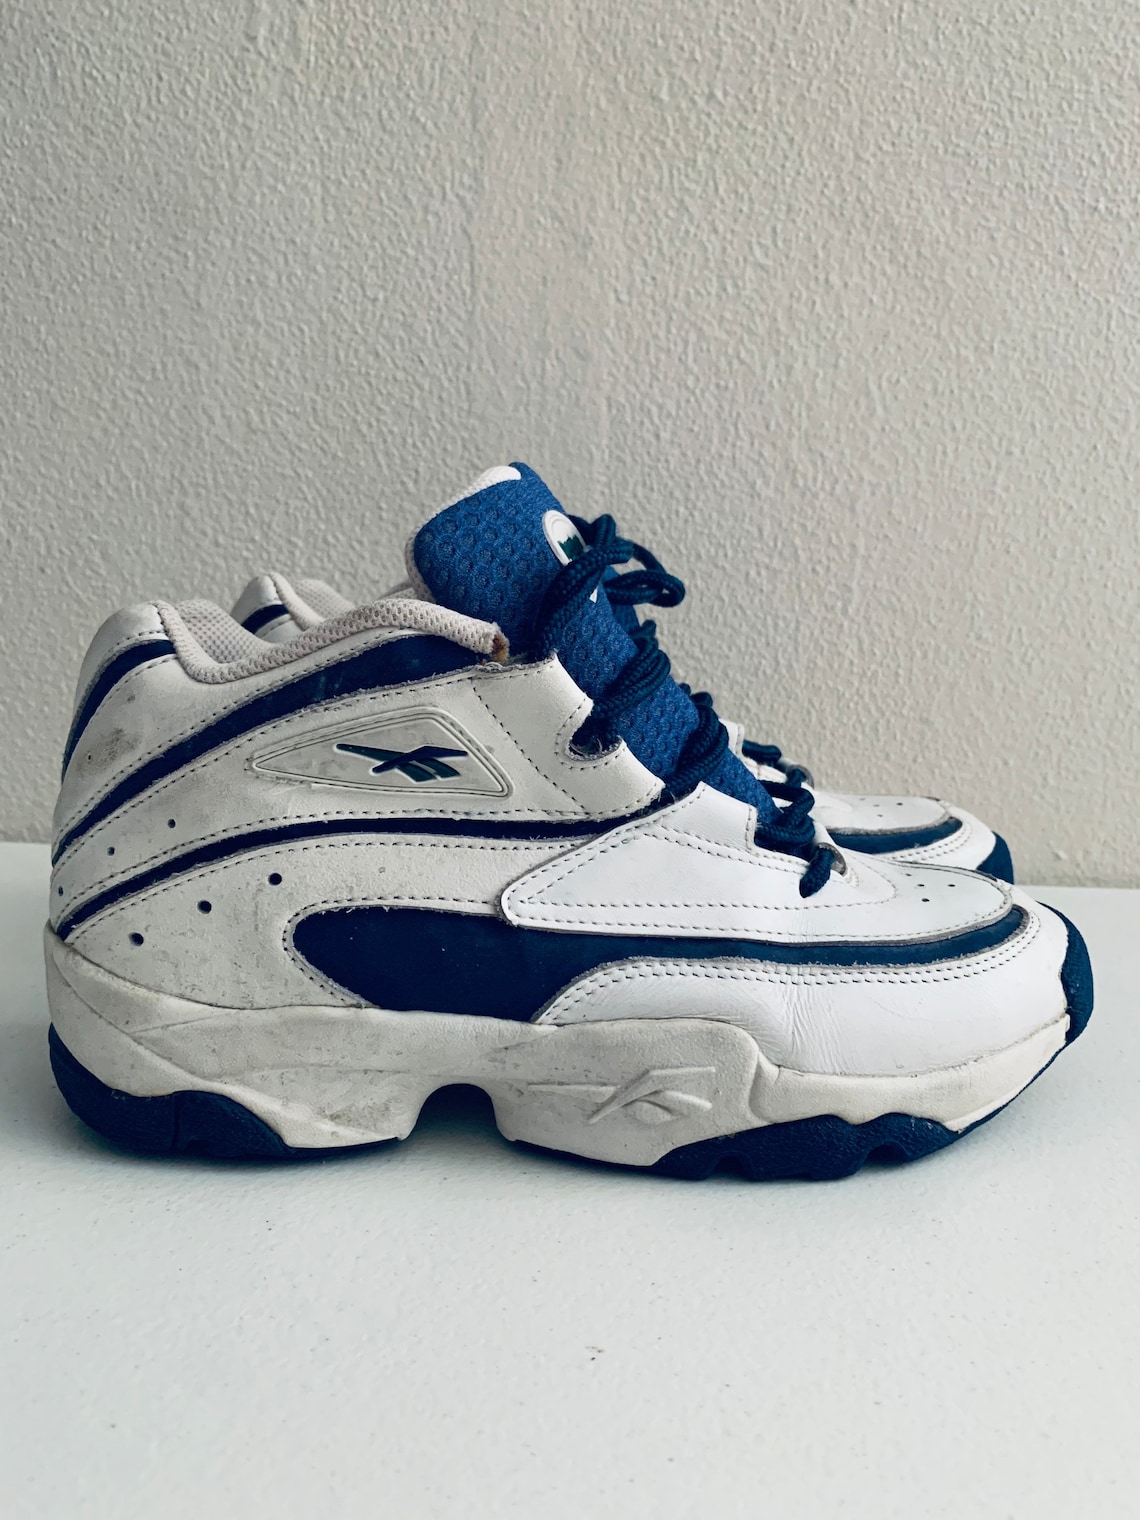 Reebok Hexalite Basketball Shoes 90s White Blue Green Size 9 | Etsy